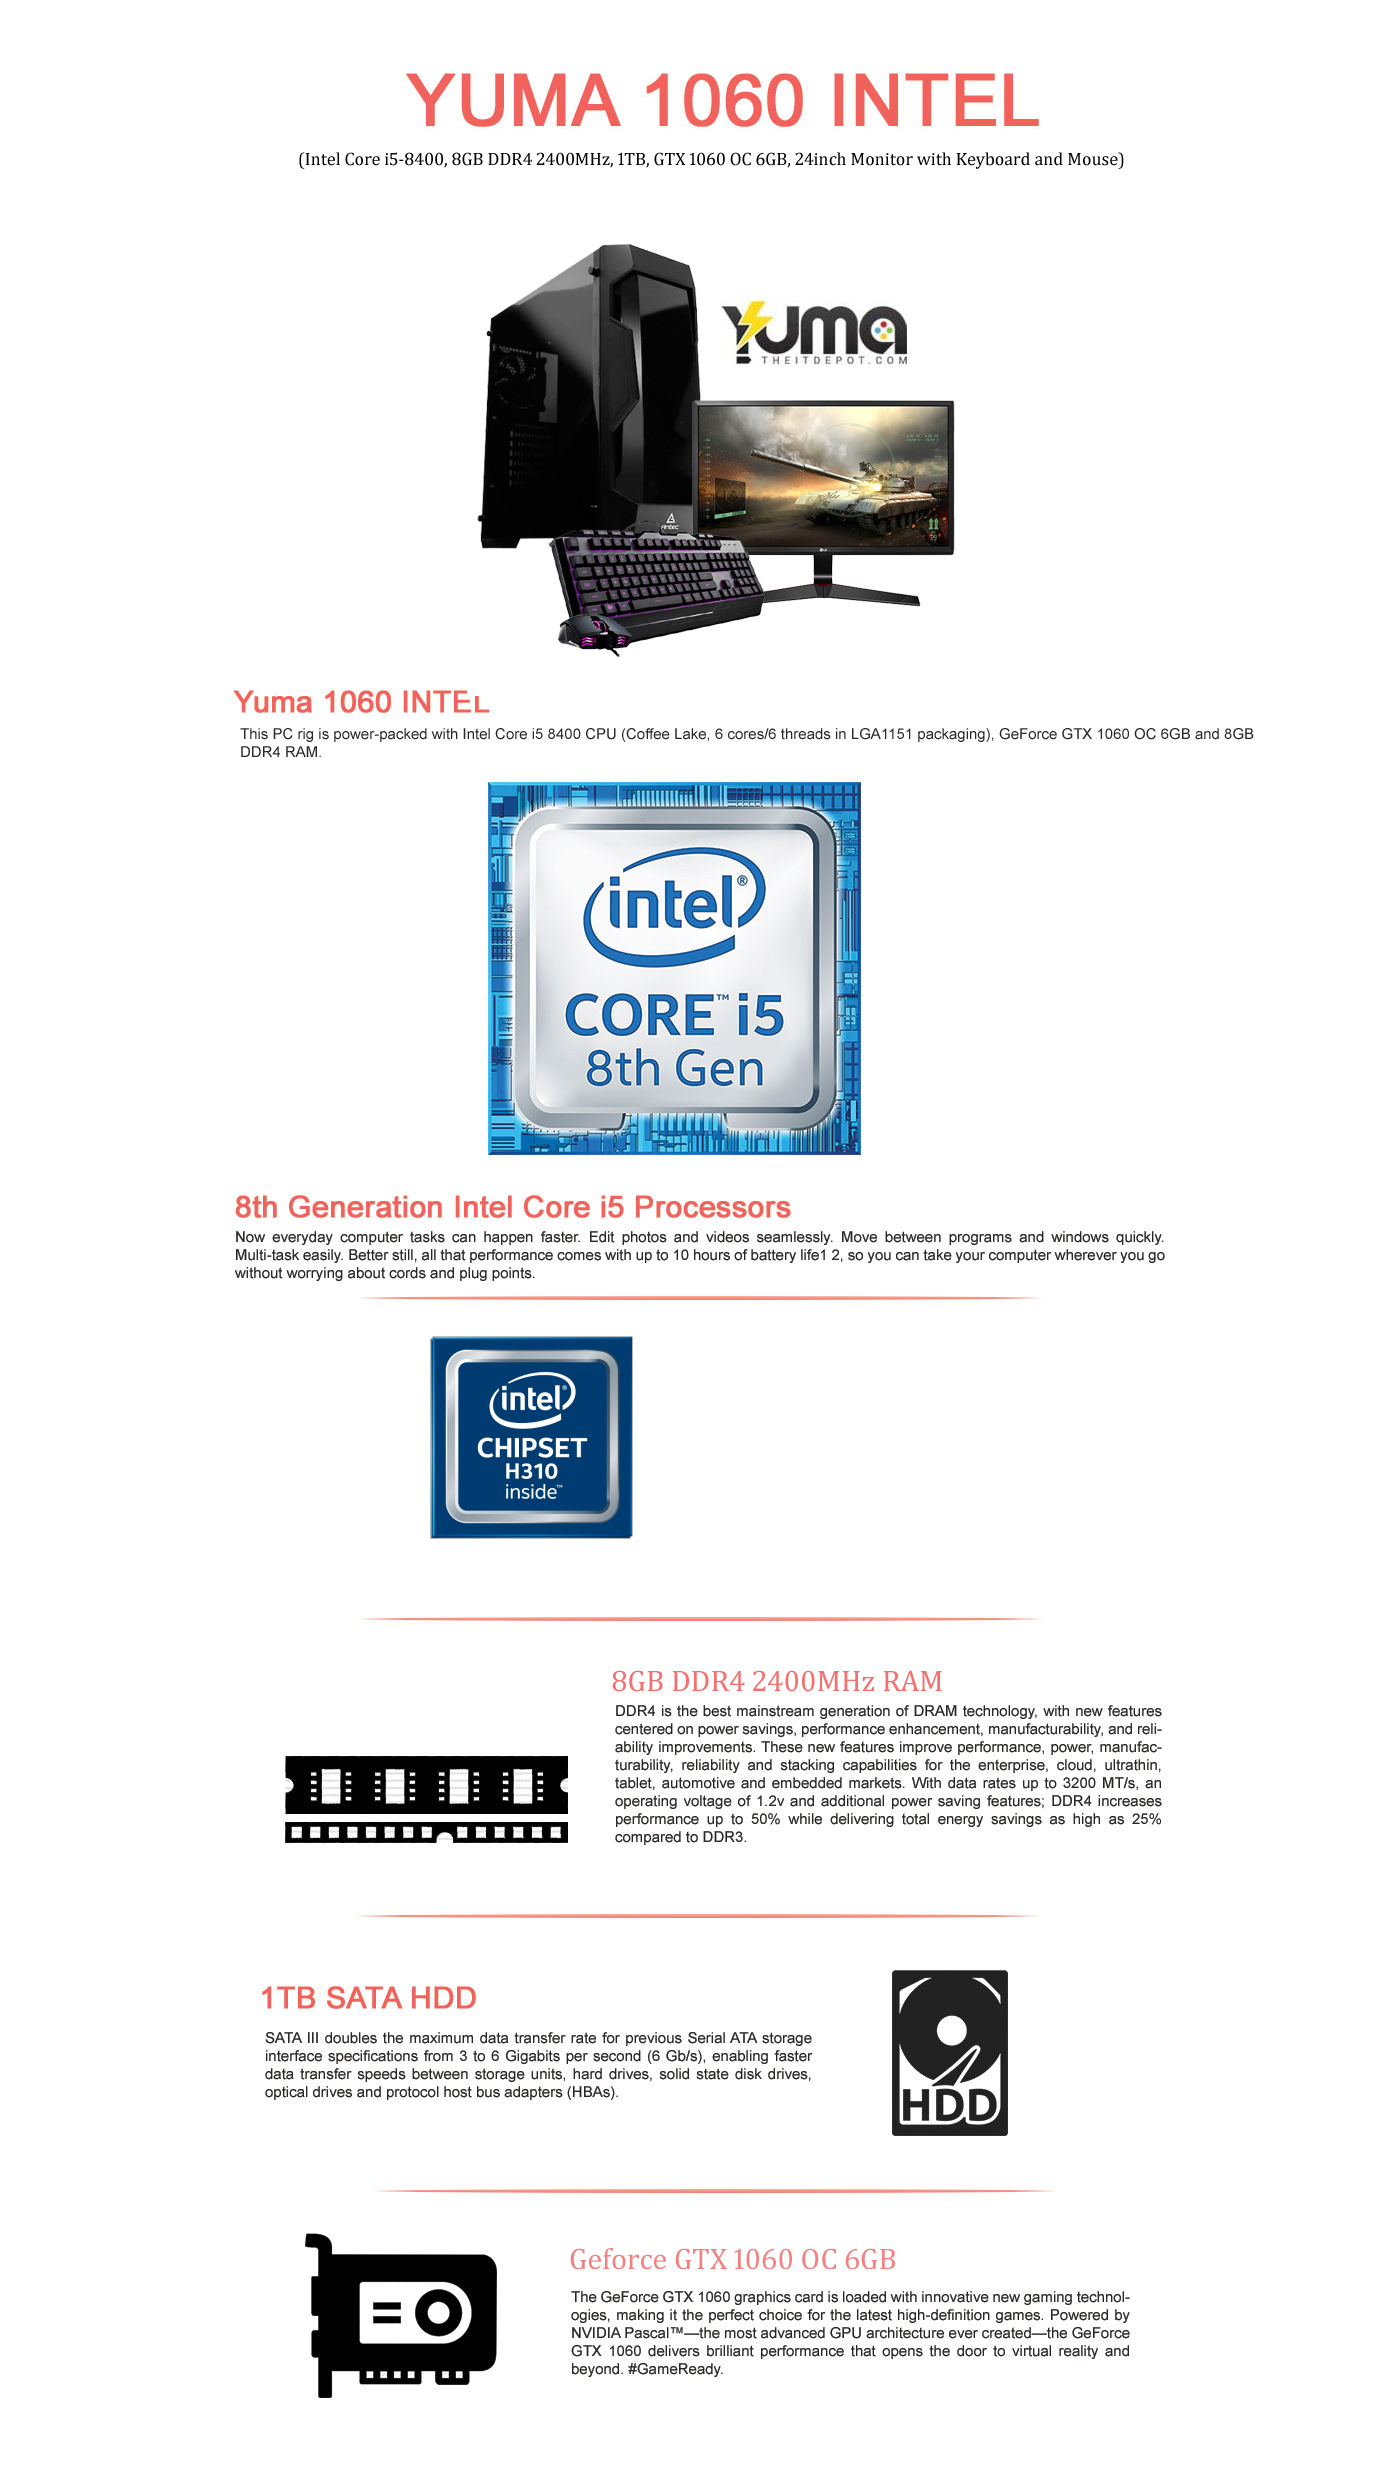  Buy Online Yuma 1060 INTEL (Intel Core i5-8400, 8GB DDR4 2400MHz, 1TB, GTX 1060 OC 6GB, 24inch Monitor with Keyboard and Mouse)